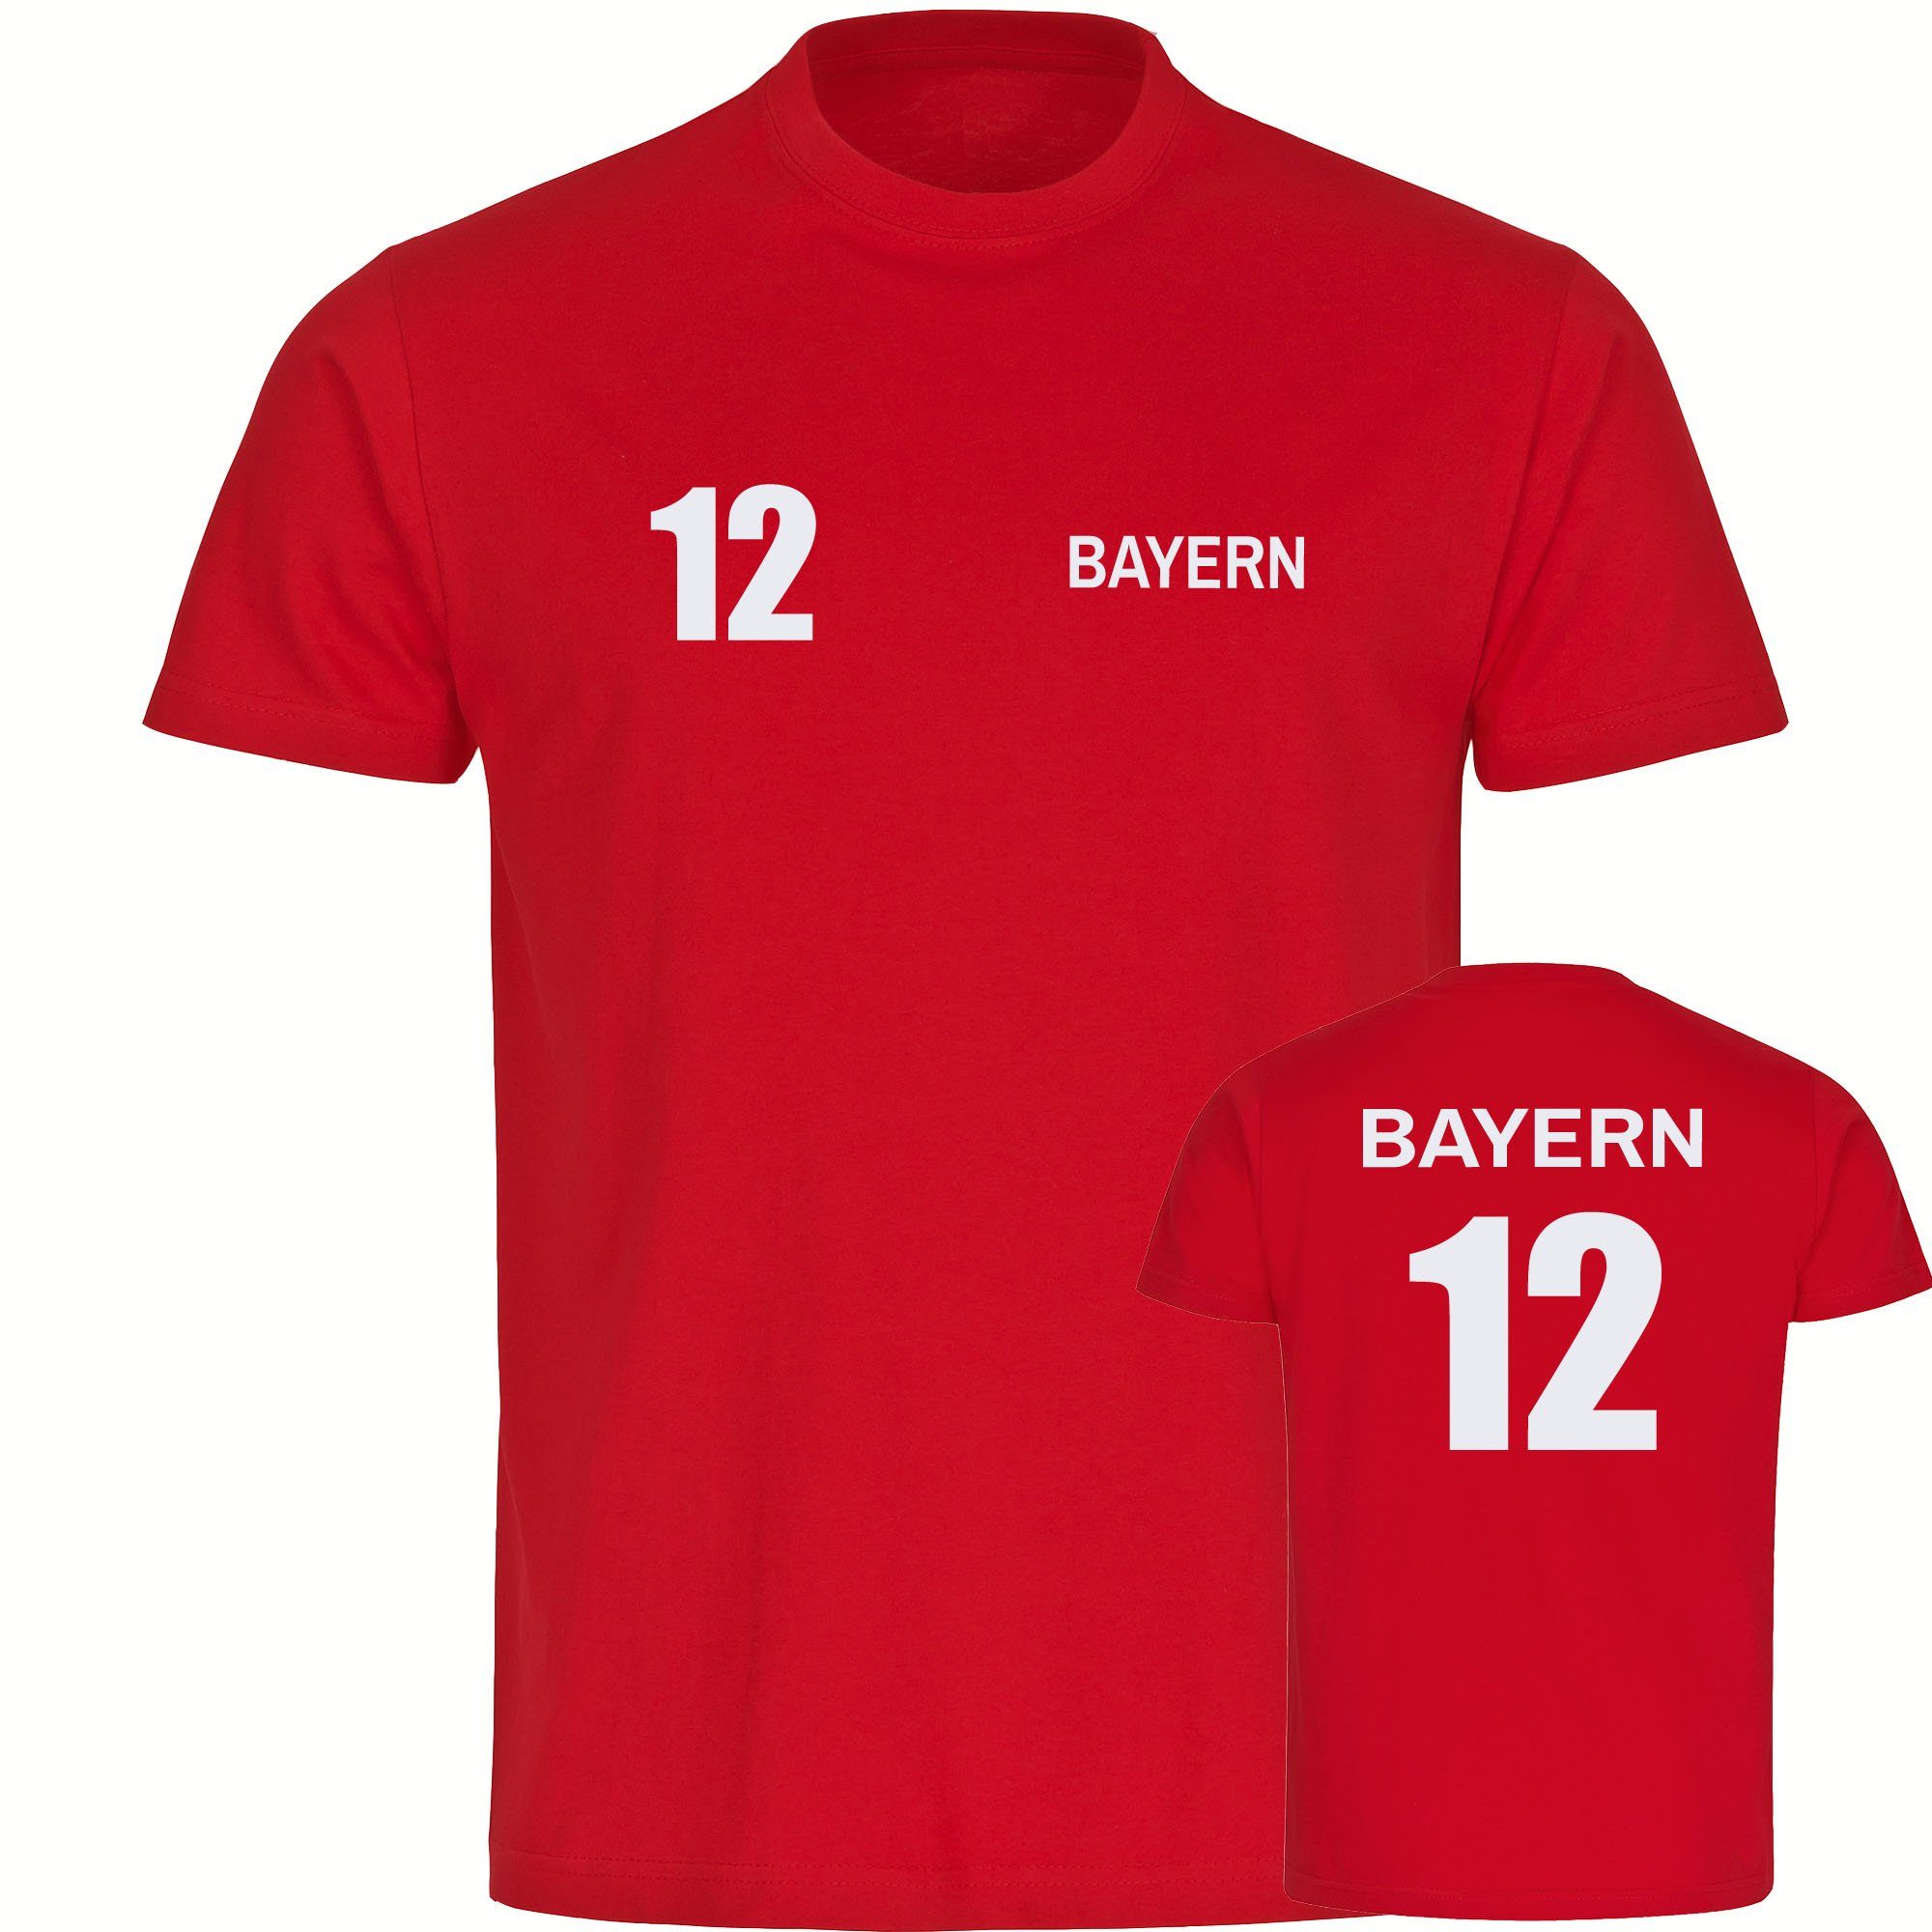 multifanshop T-Shirt Herren Bayern - Trikot 12 - Männer